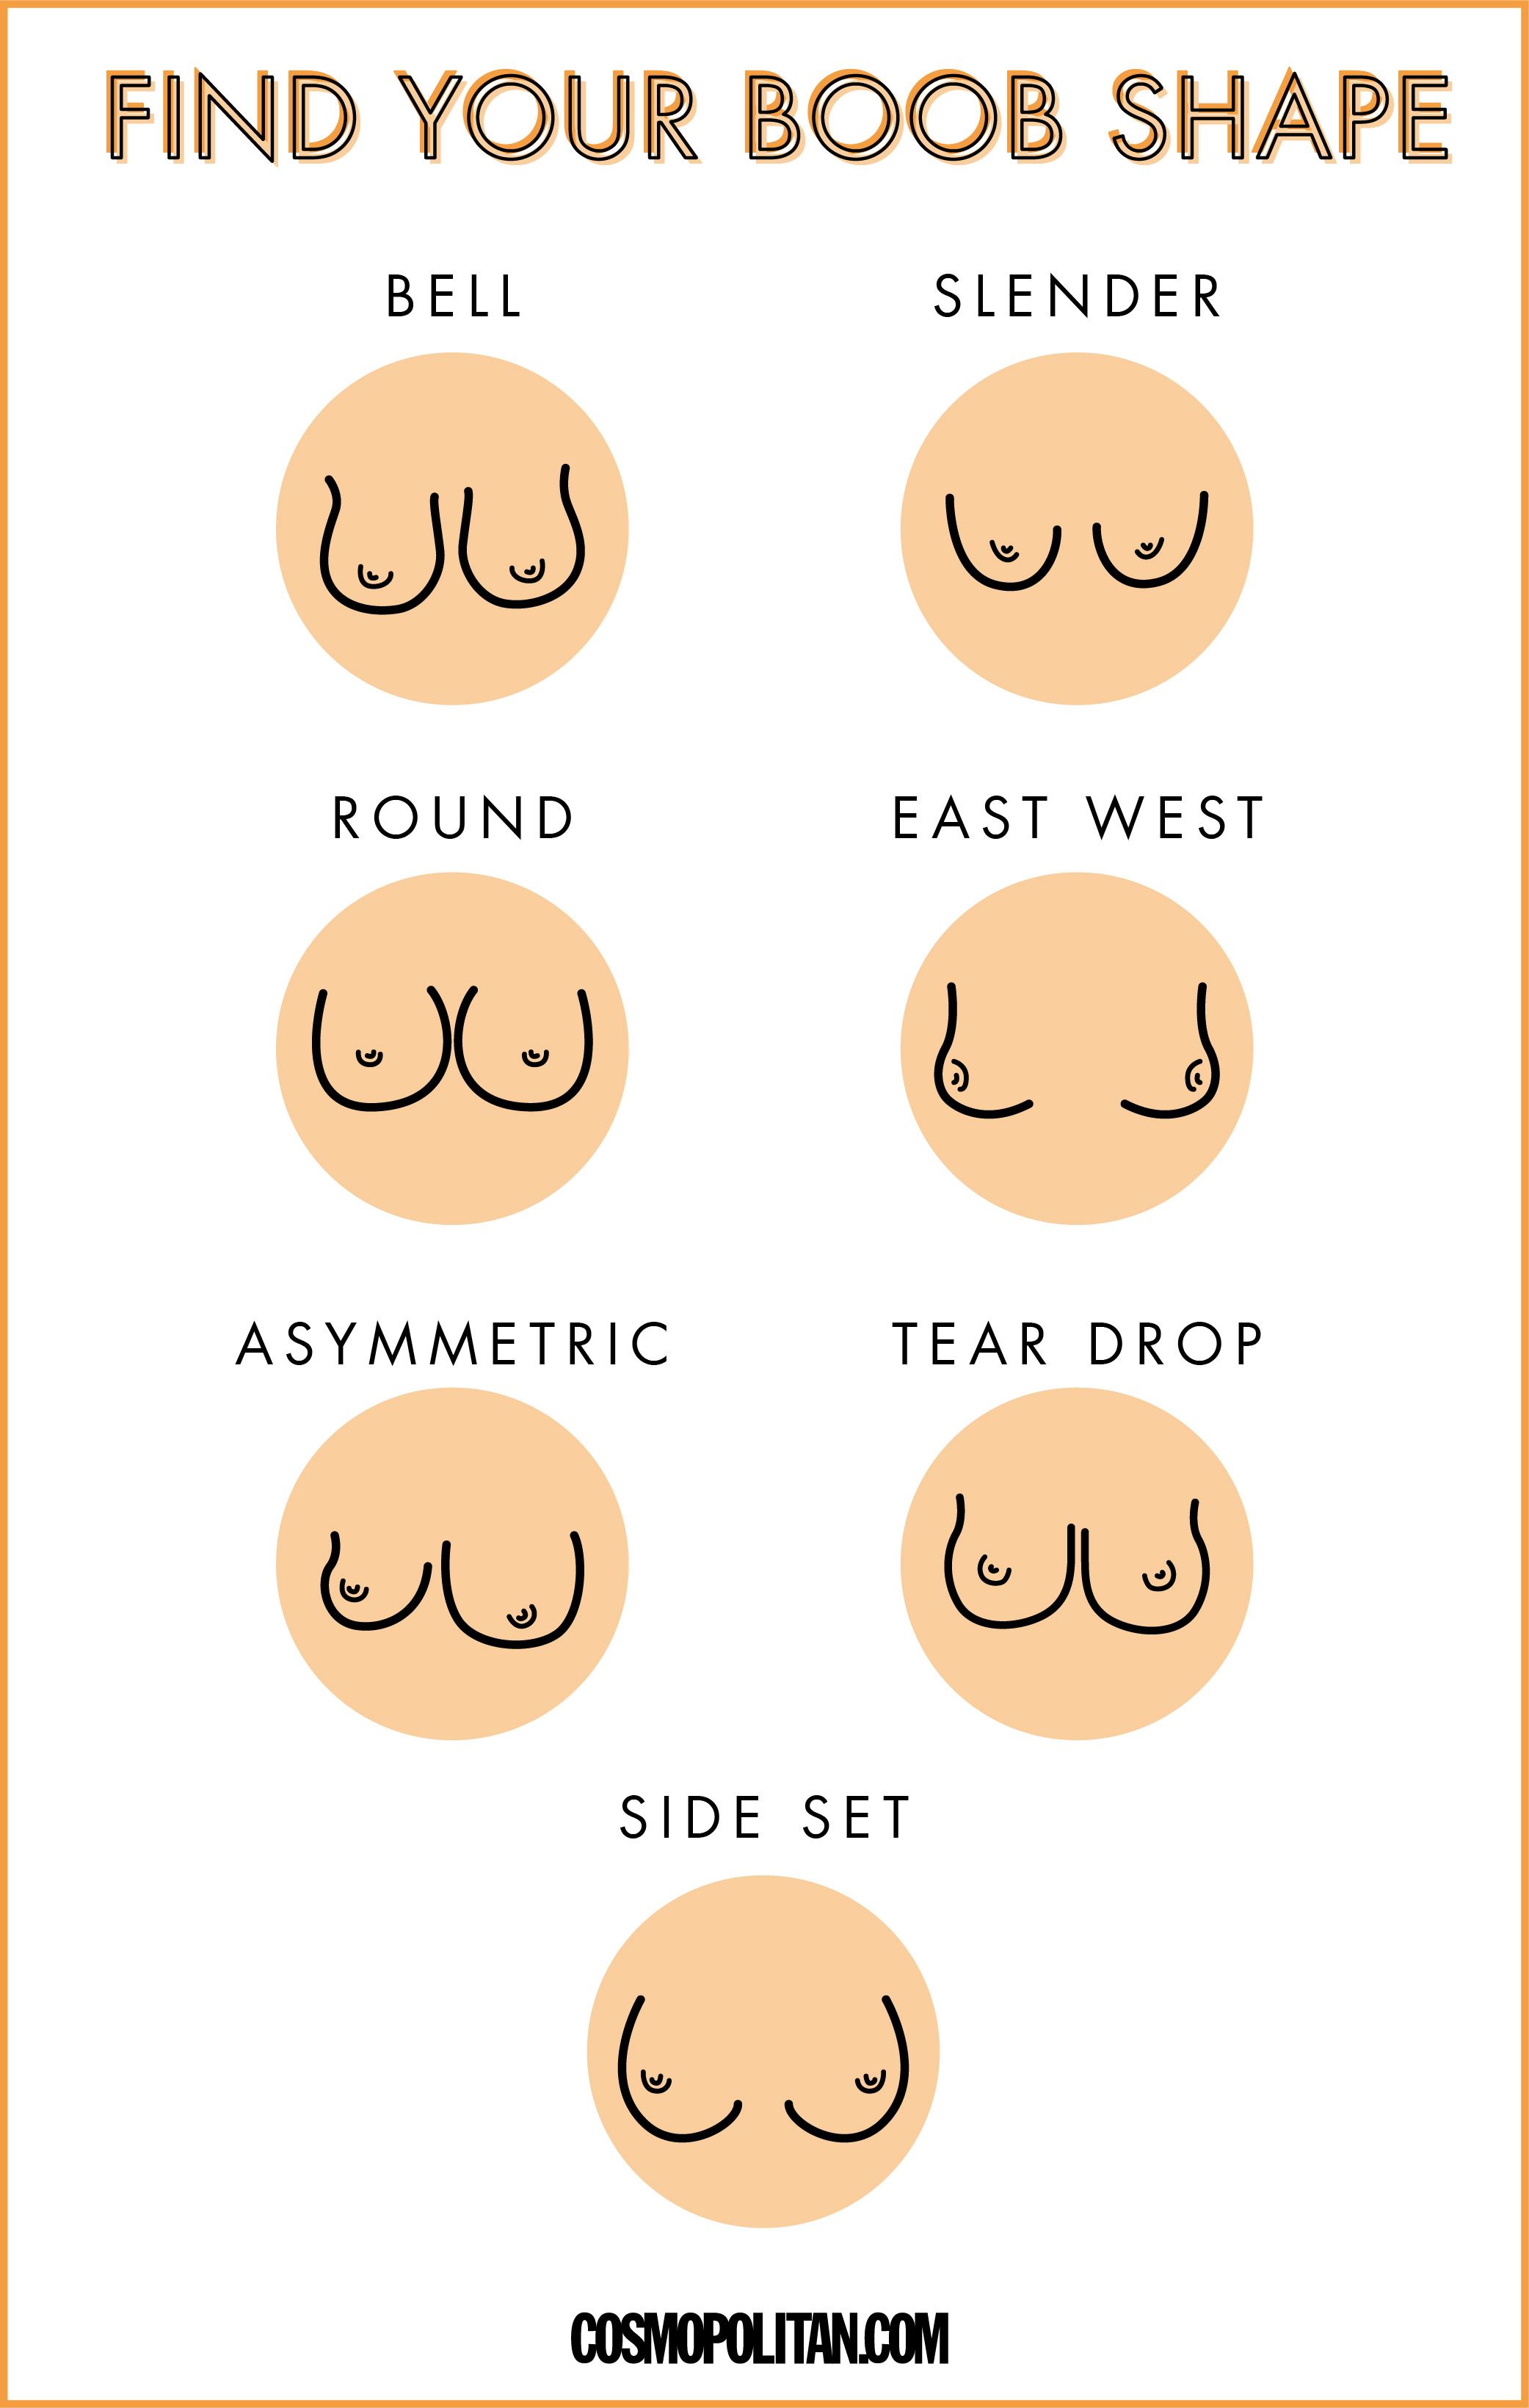 форма груди у женщин характер фото 105